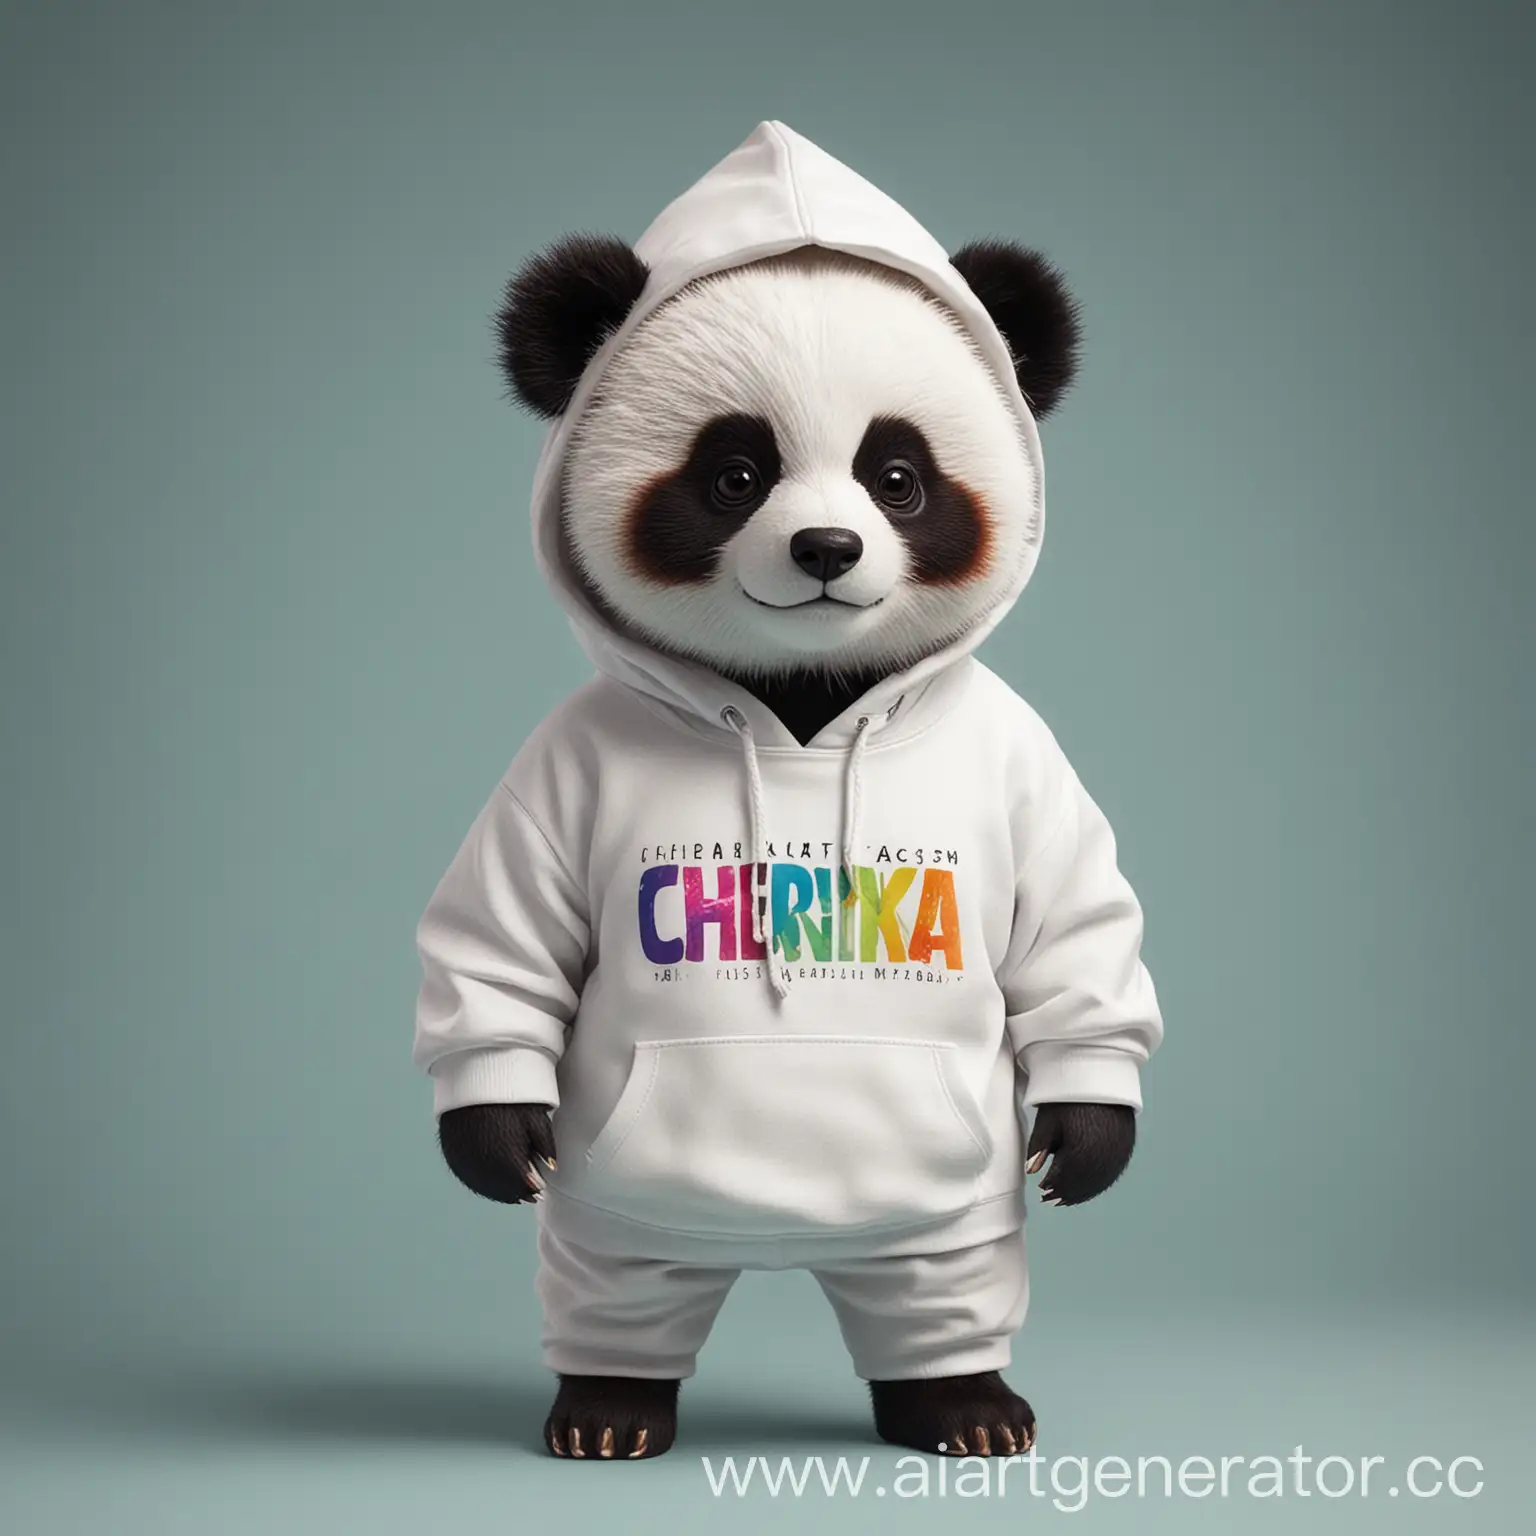 Colorful-Panda-in-Chernika-White-Hoodie